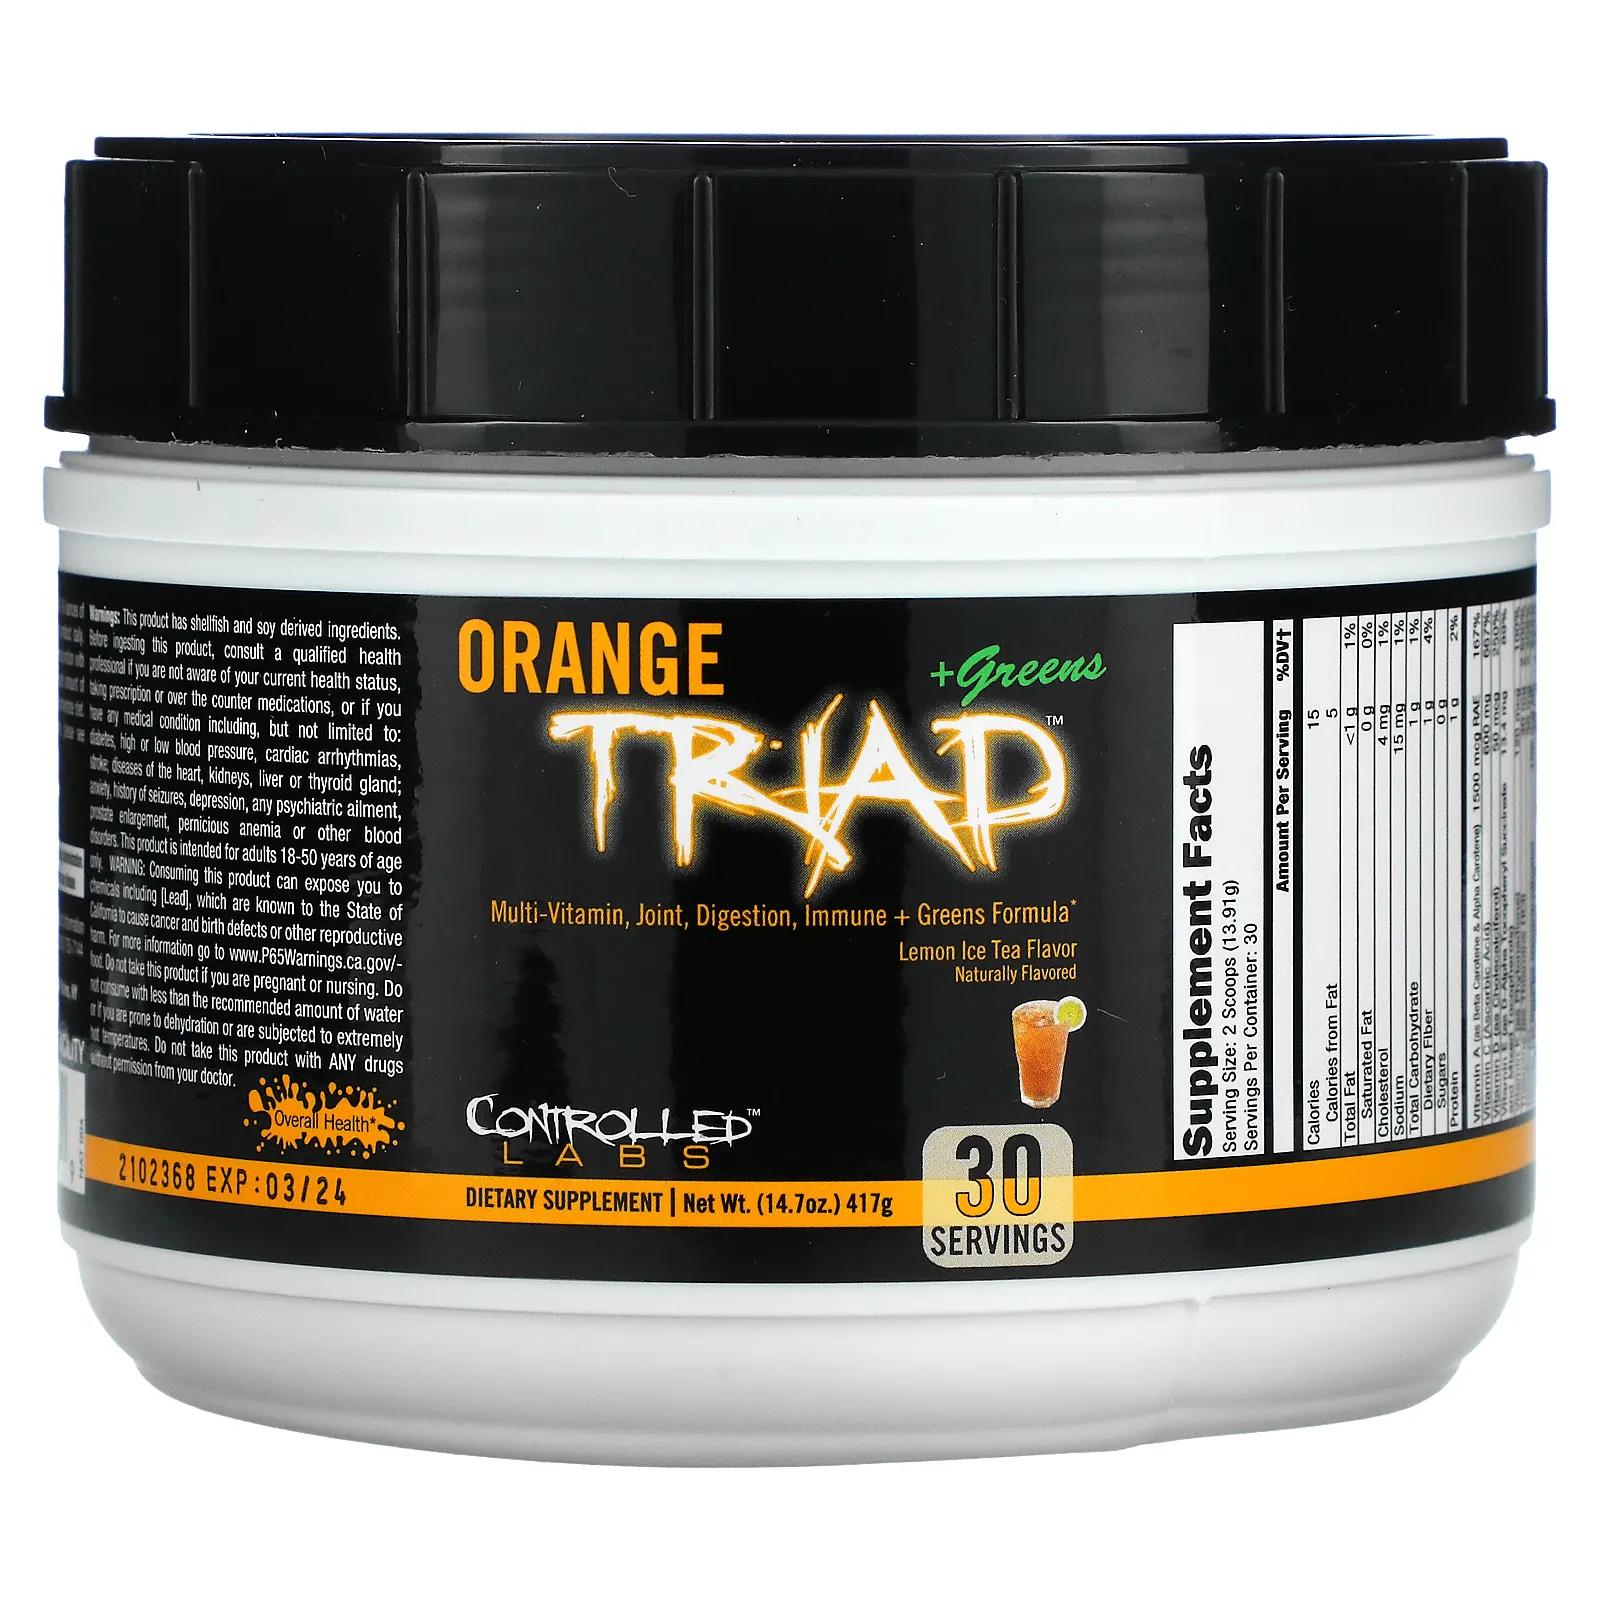 Controlled Labs Orange Triad + Greens Лимонный чай со льдом 417 грамм controlled labs orange triad greens апельсин 407 г 14 37 унции